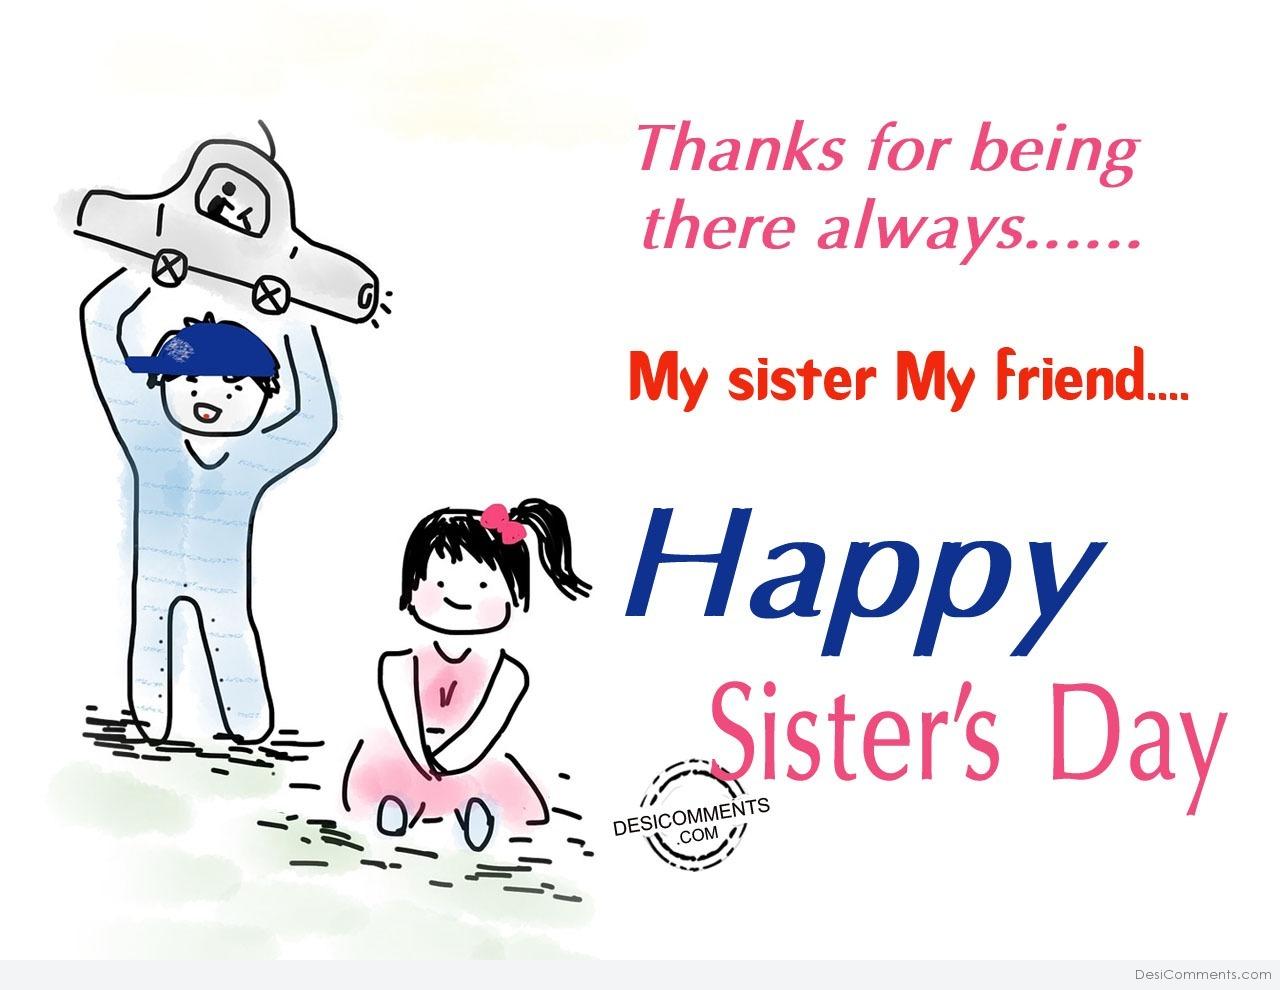 My sister is the right. Sister Day. Хэппи Уэдинг Дэй. Сестричка действуй 2 о Хэппи Дэй. Happy there.